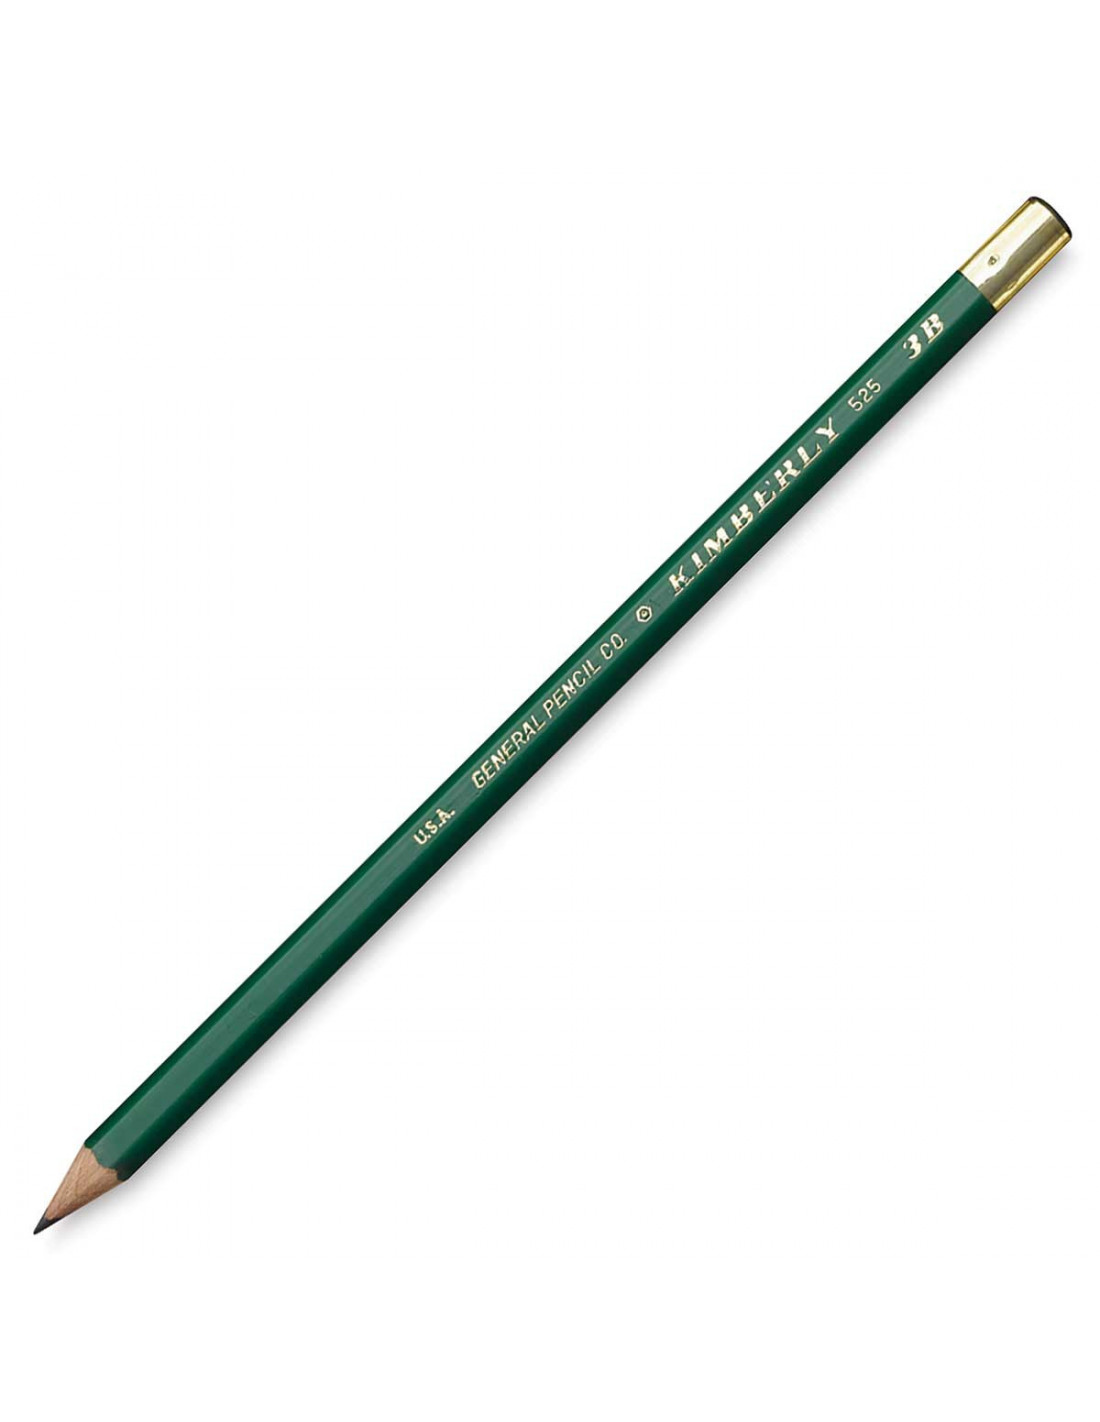 3B Graphite Pencil - Kimberly 525 - General Pencil Company